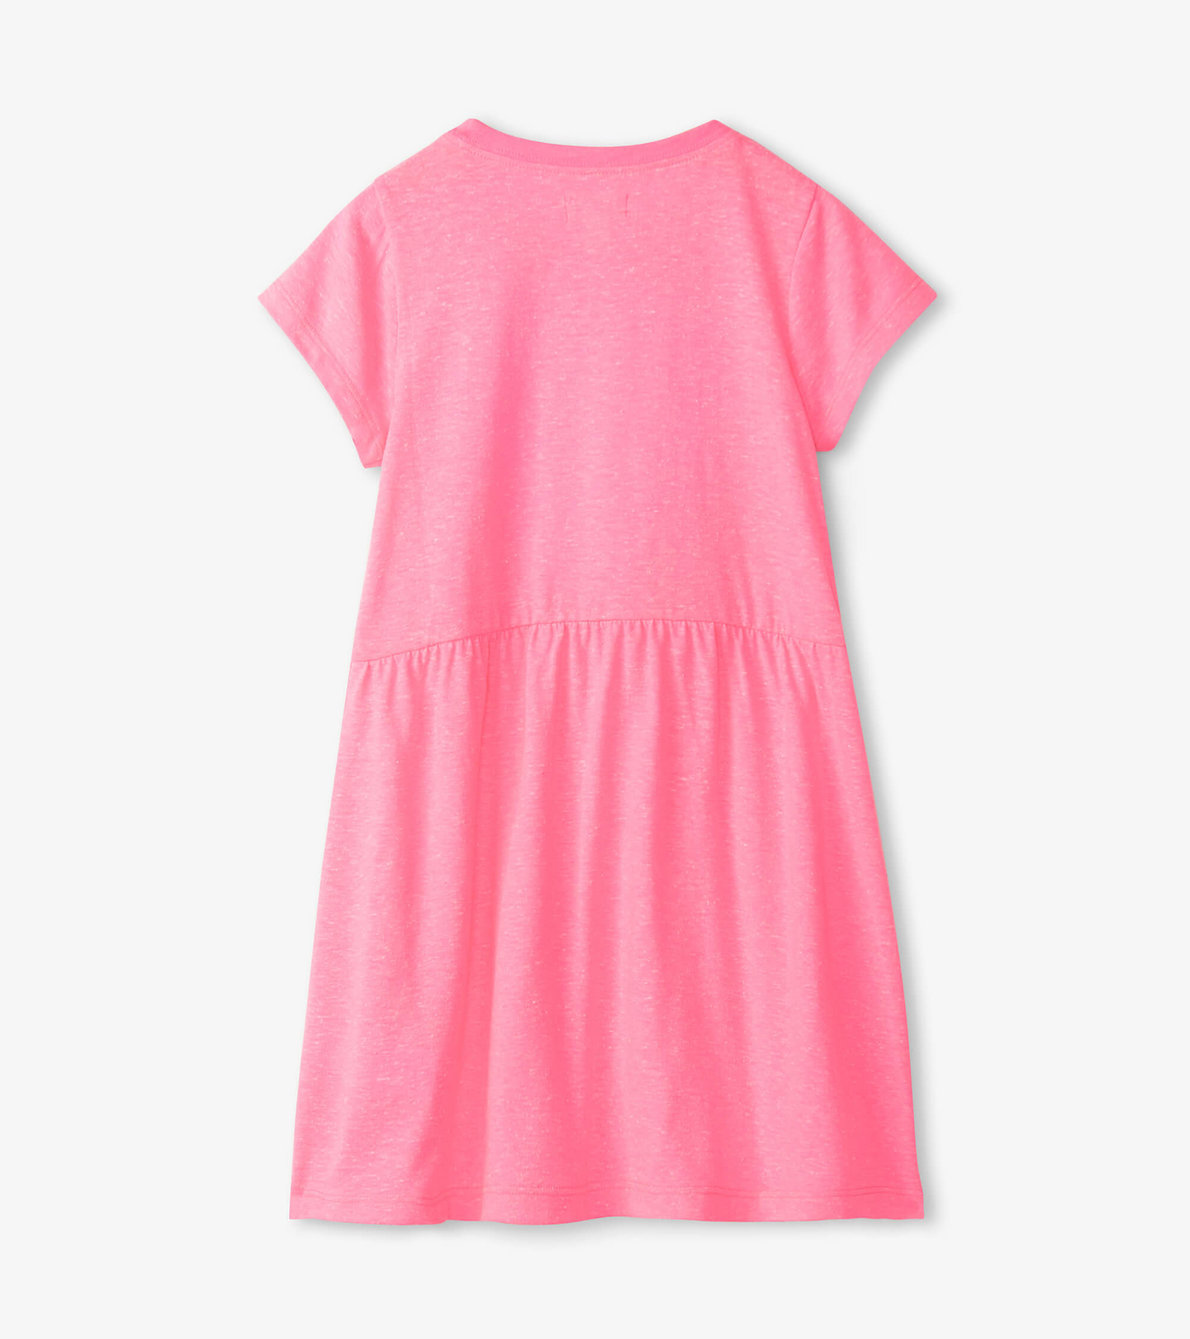 View larger image of Girls Pink Neon Skater Dress